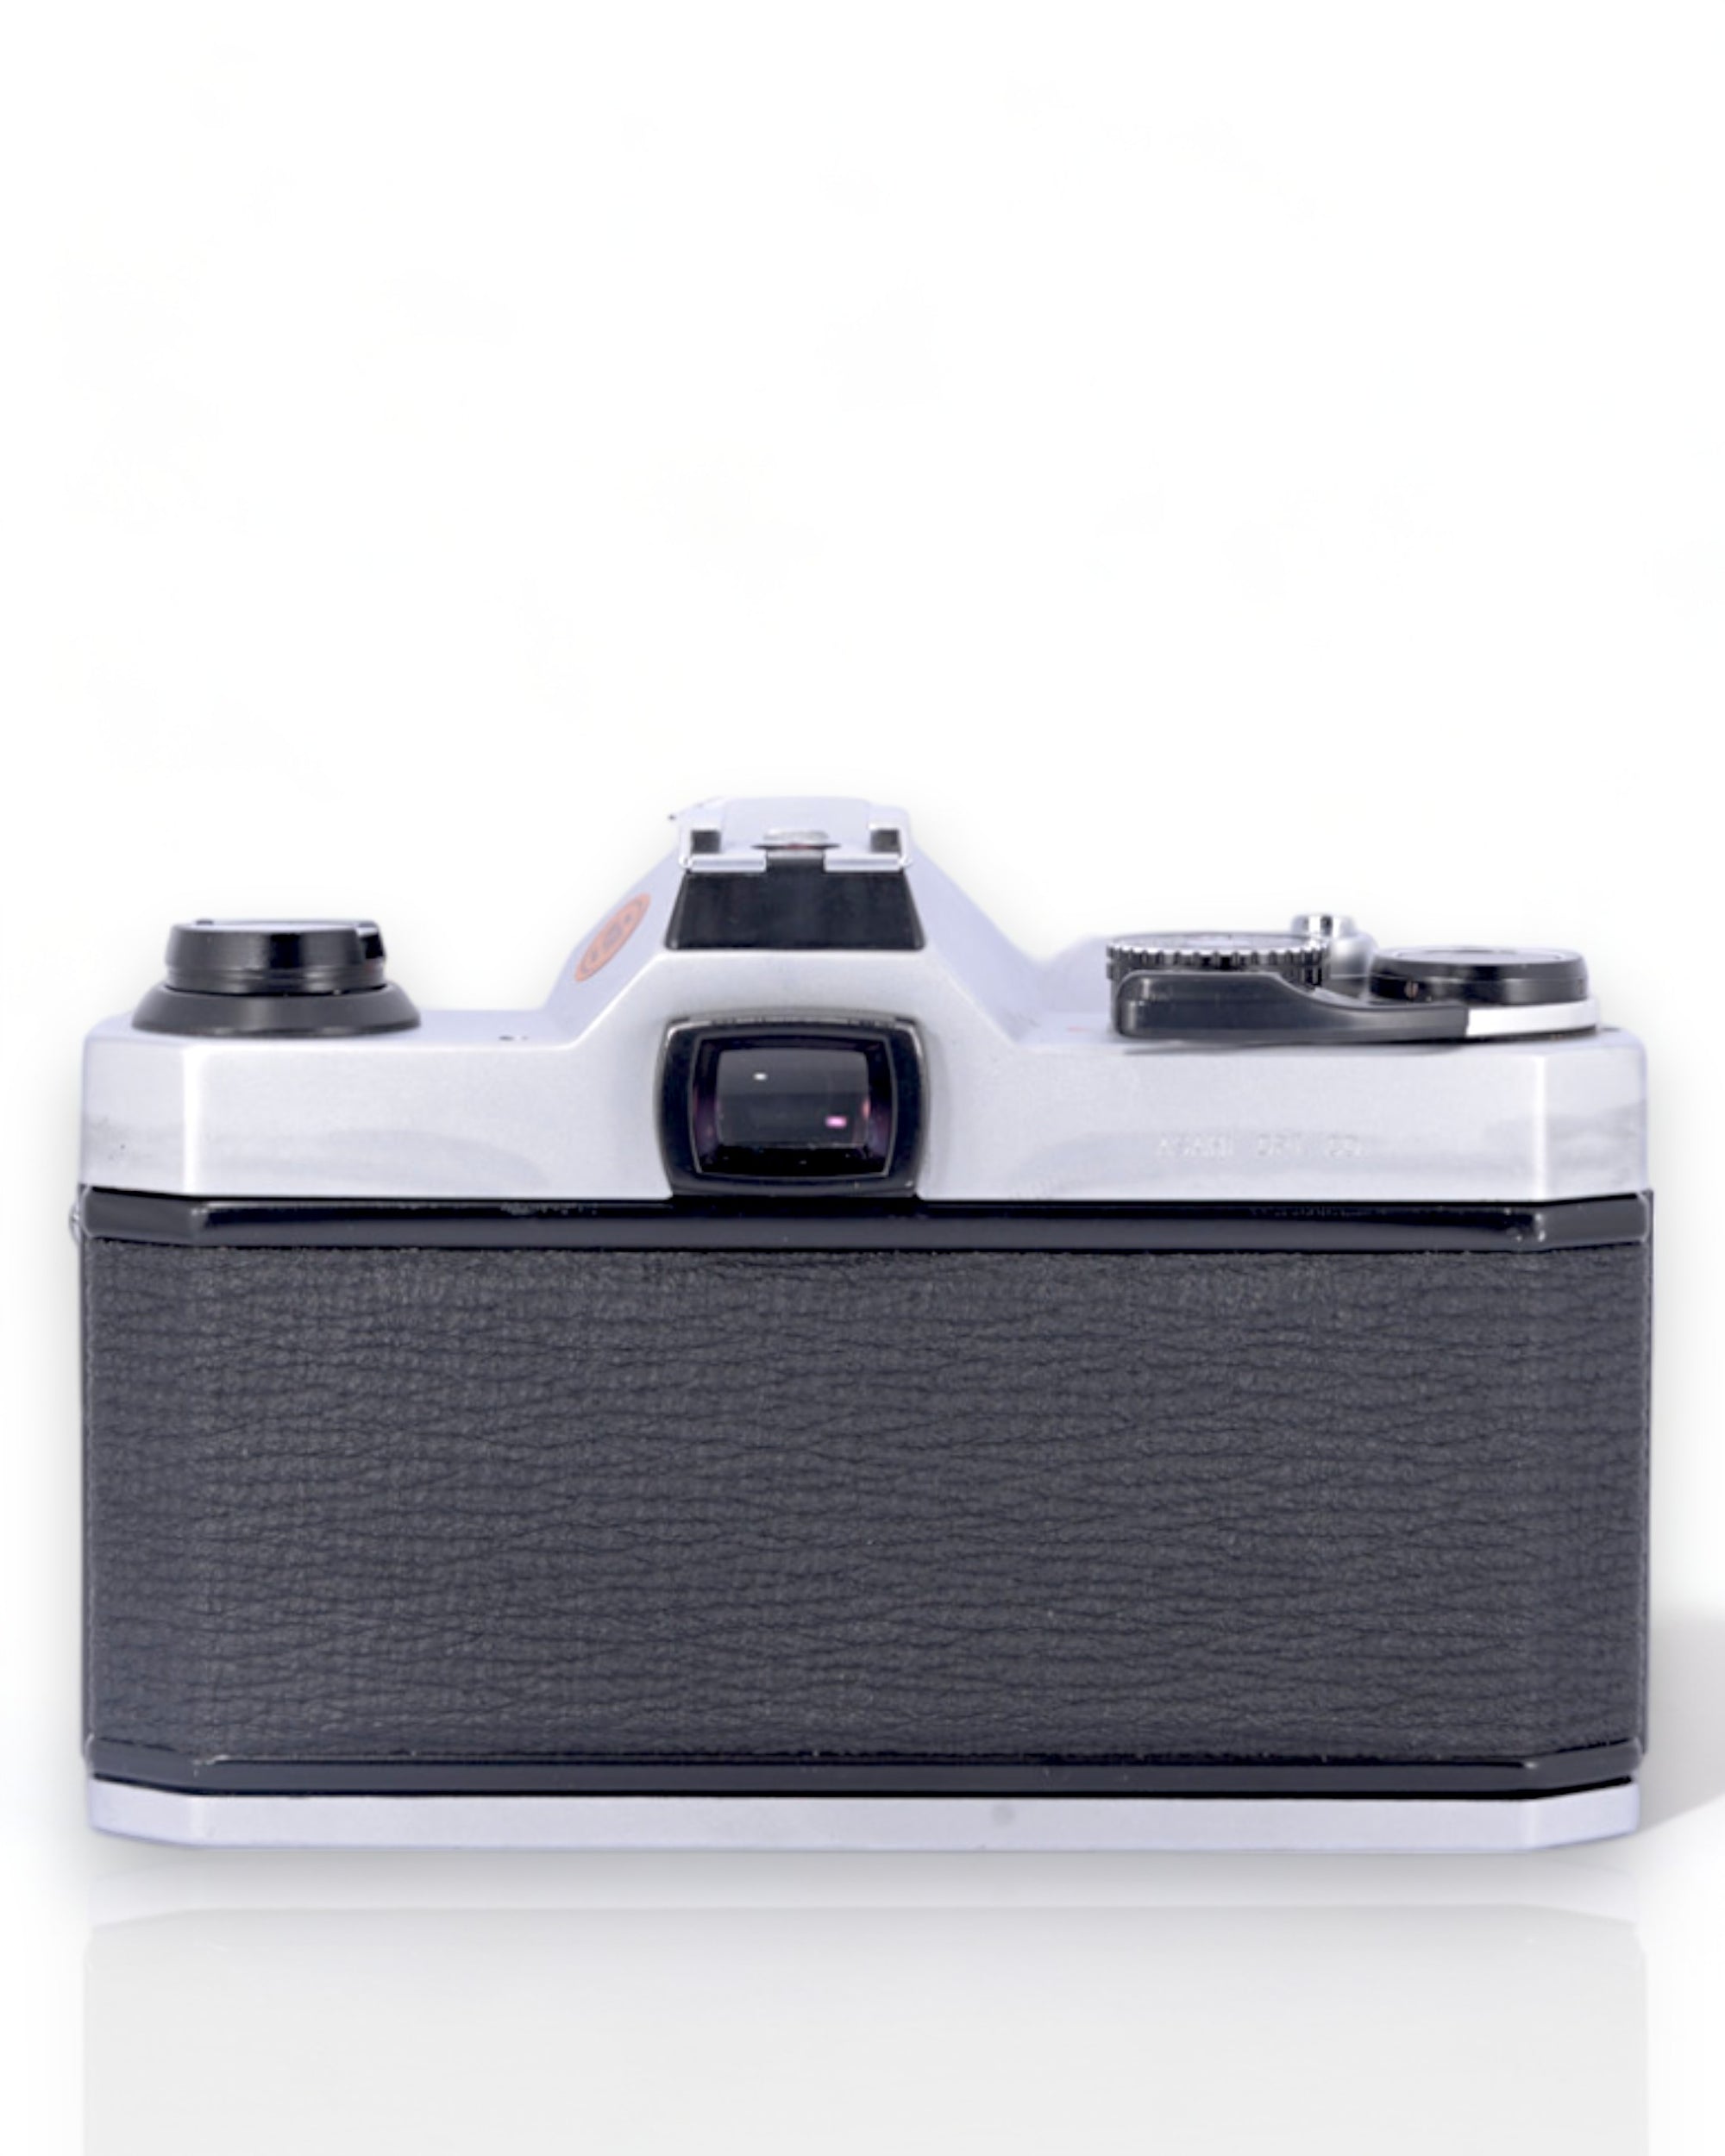 Pentax K1000 35mm SLR film camera with 50mm f2 lens